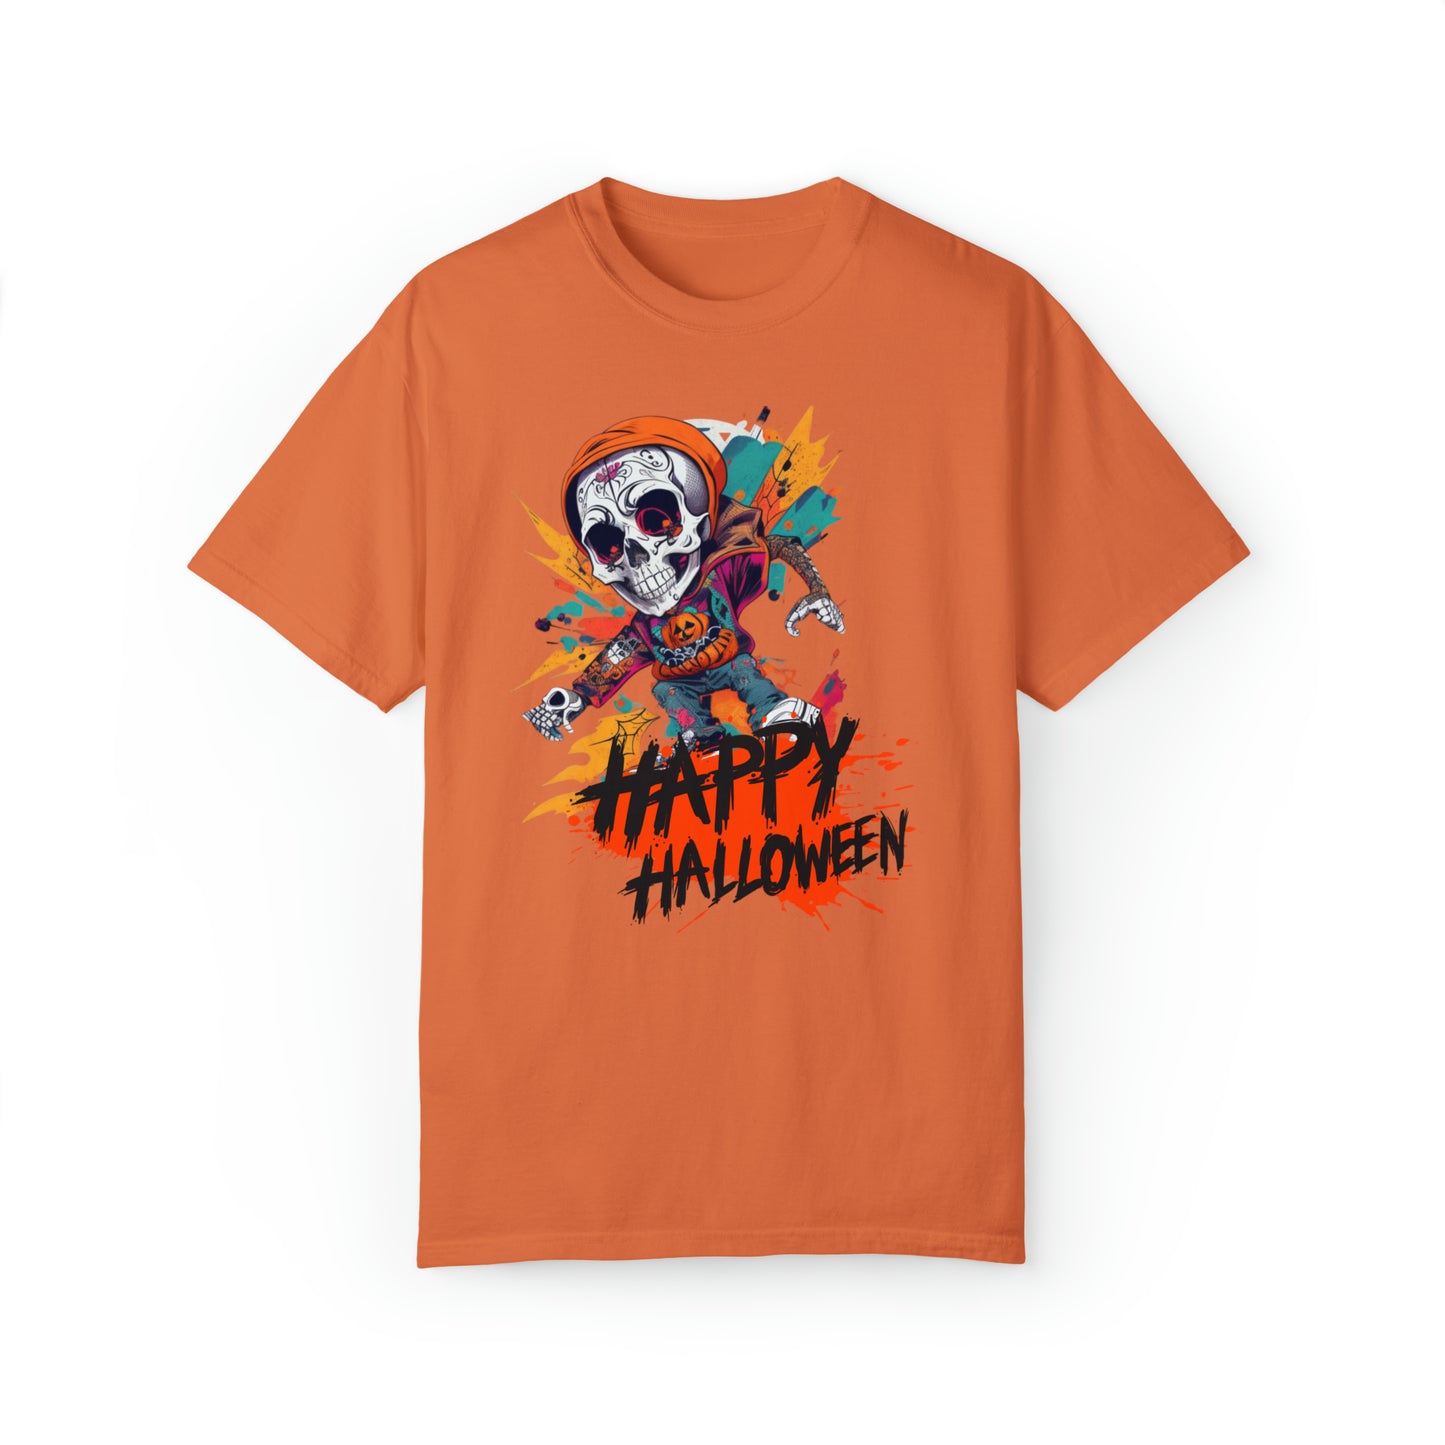 Unisex Garment-Dyed T-shirt - Halloween - Young skull